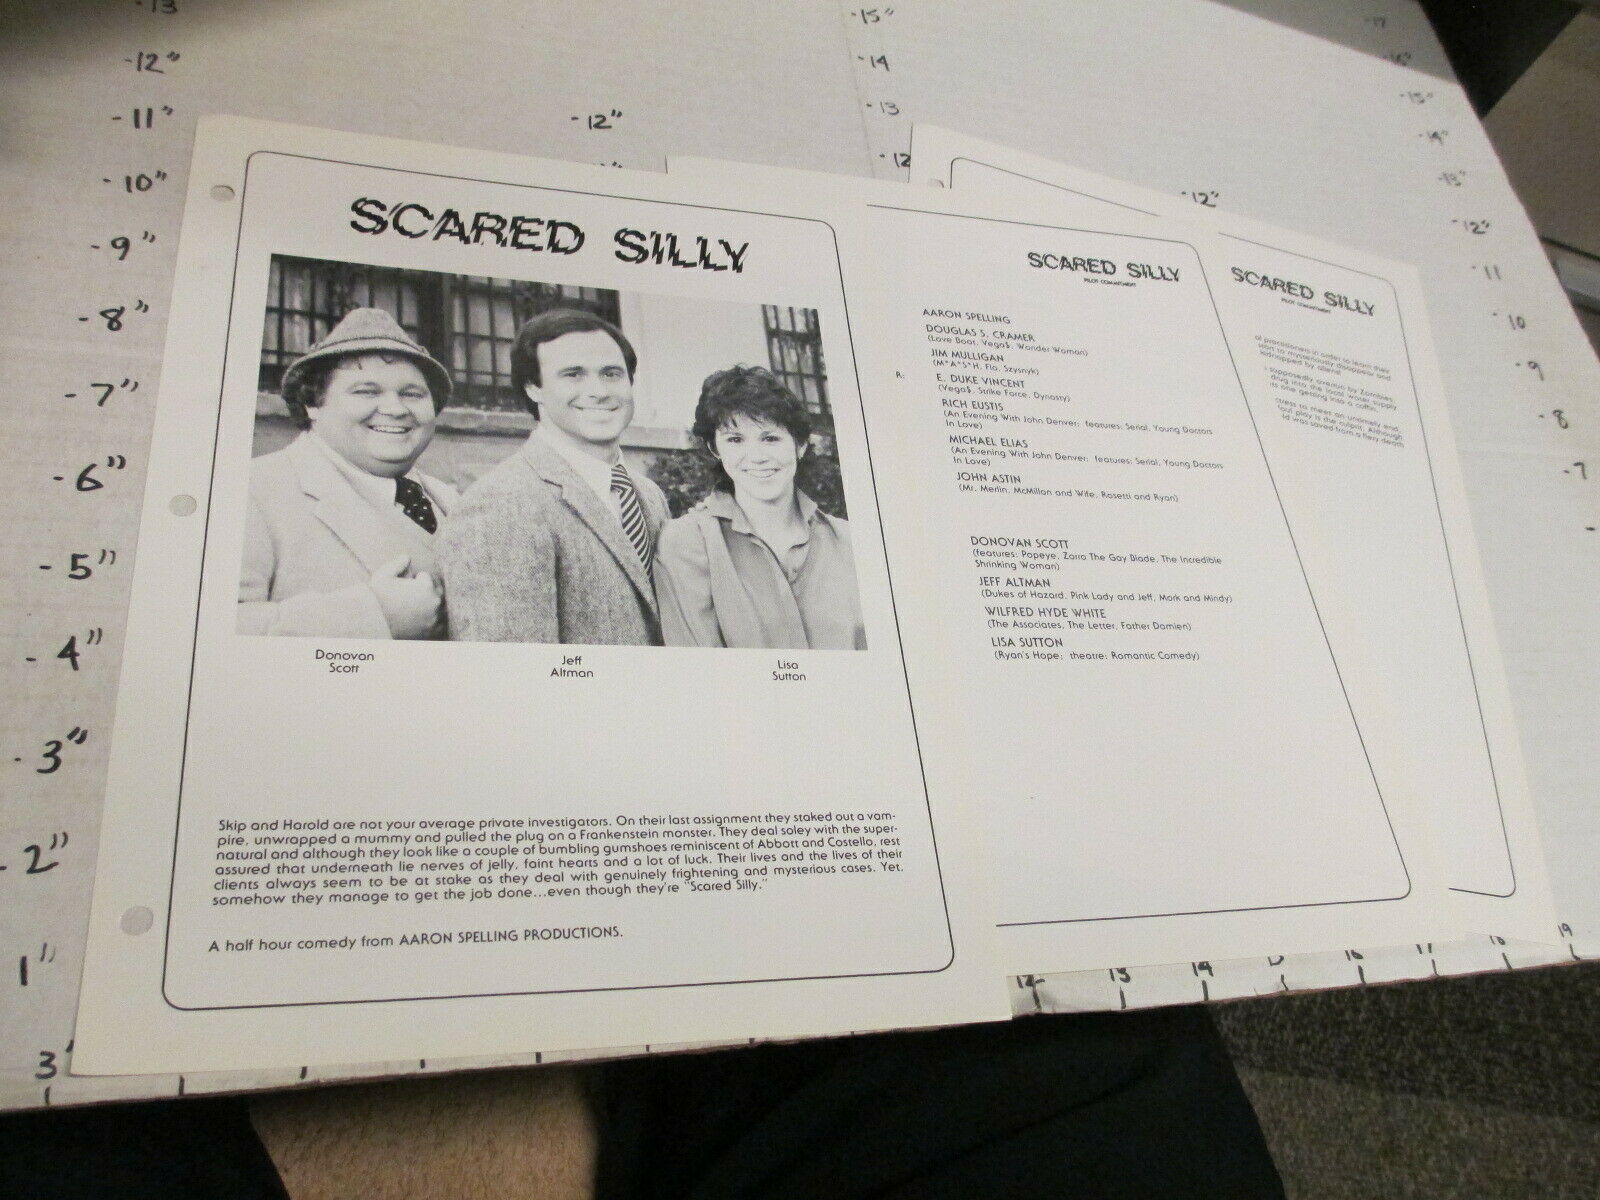 ABC TV show photo 1982 SCARED SILLY Jeff Altman Donovan Scott Lisa Sutton